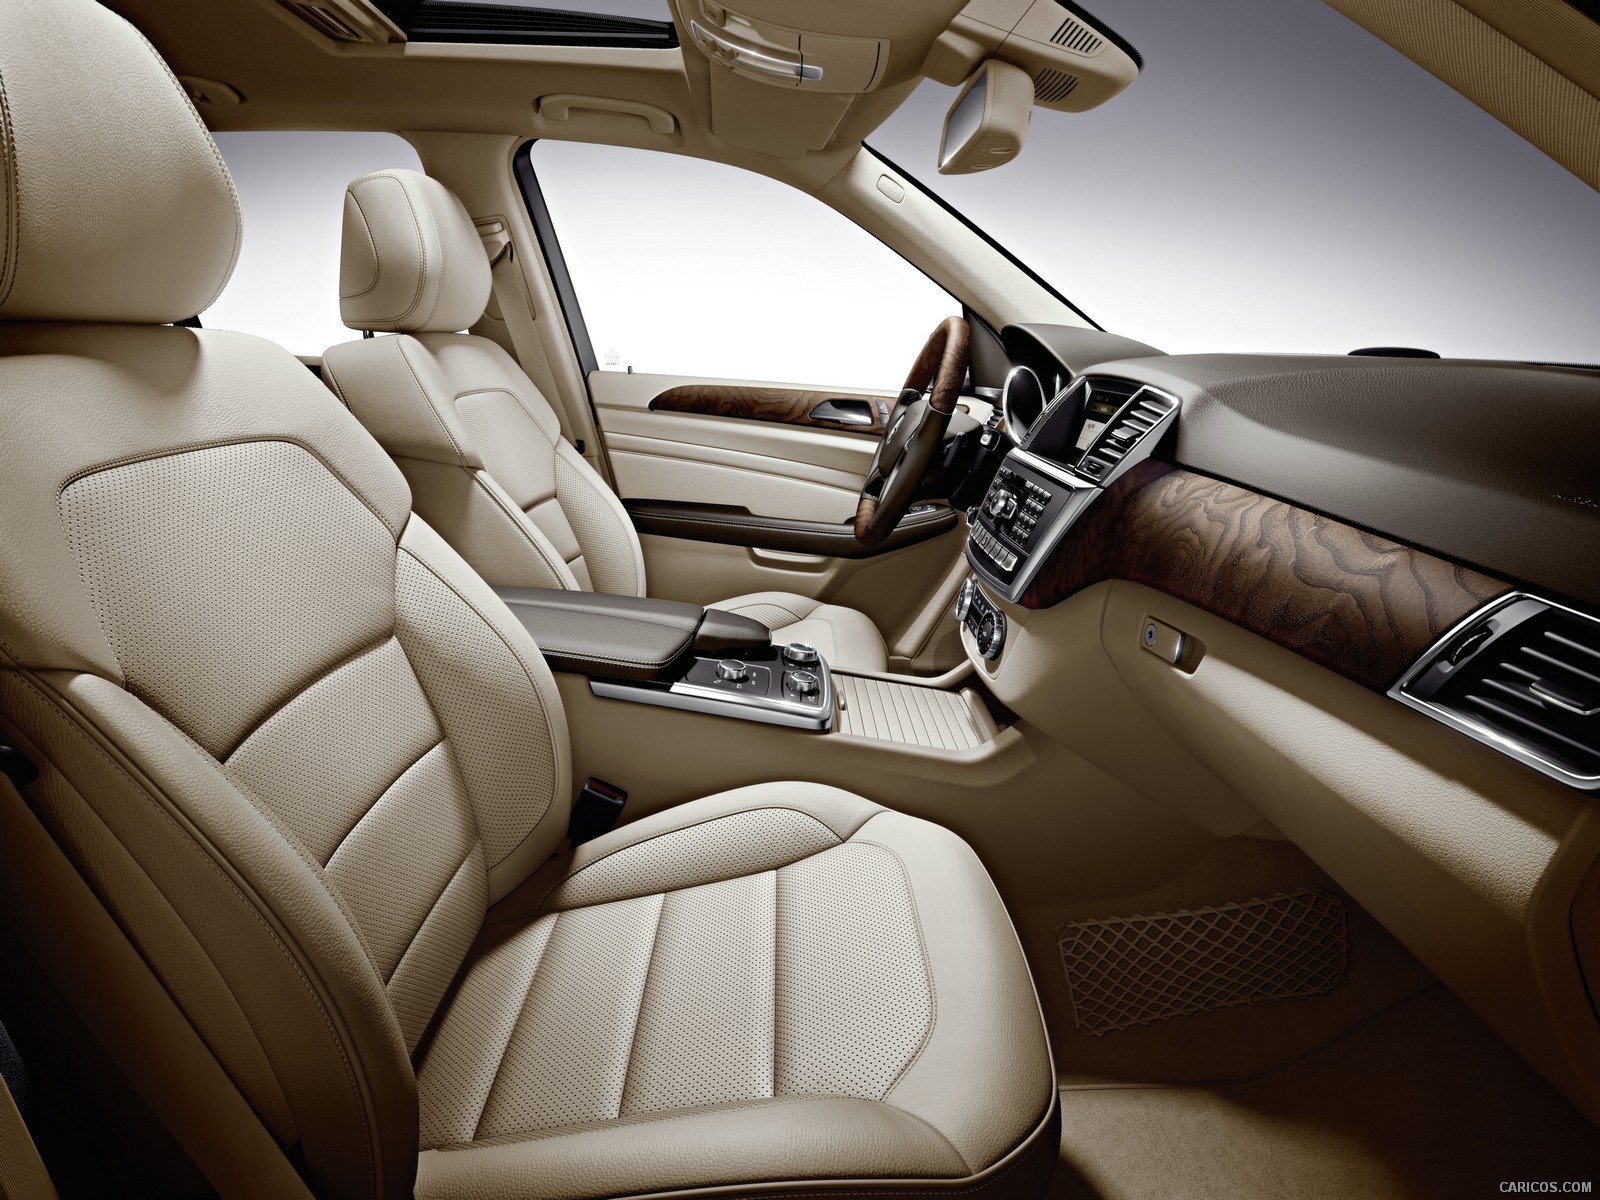 2012 Mercedes-Benz M-Class - Interior Front Seats, #237 of 320